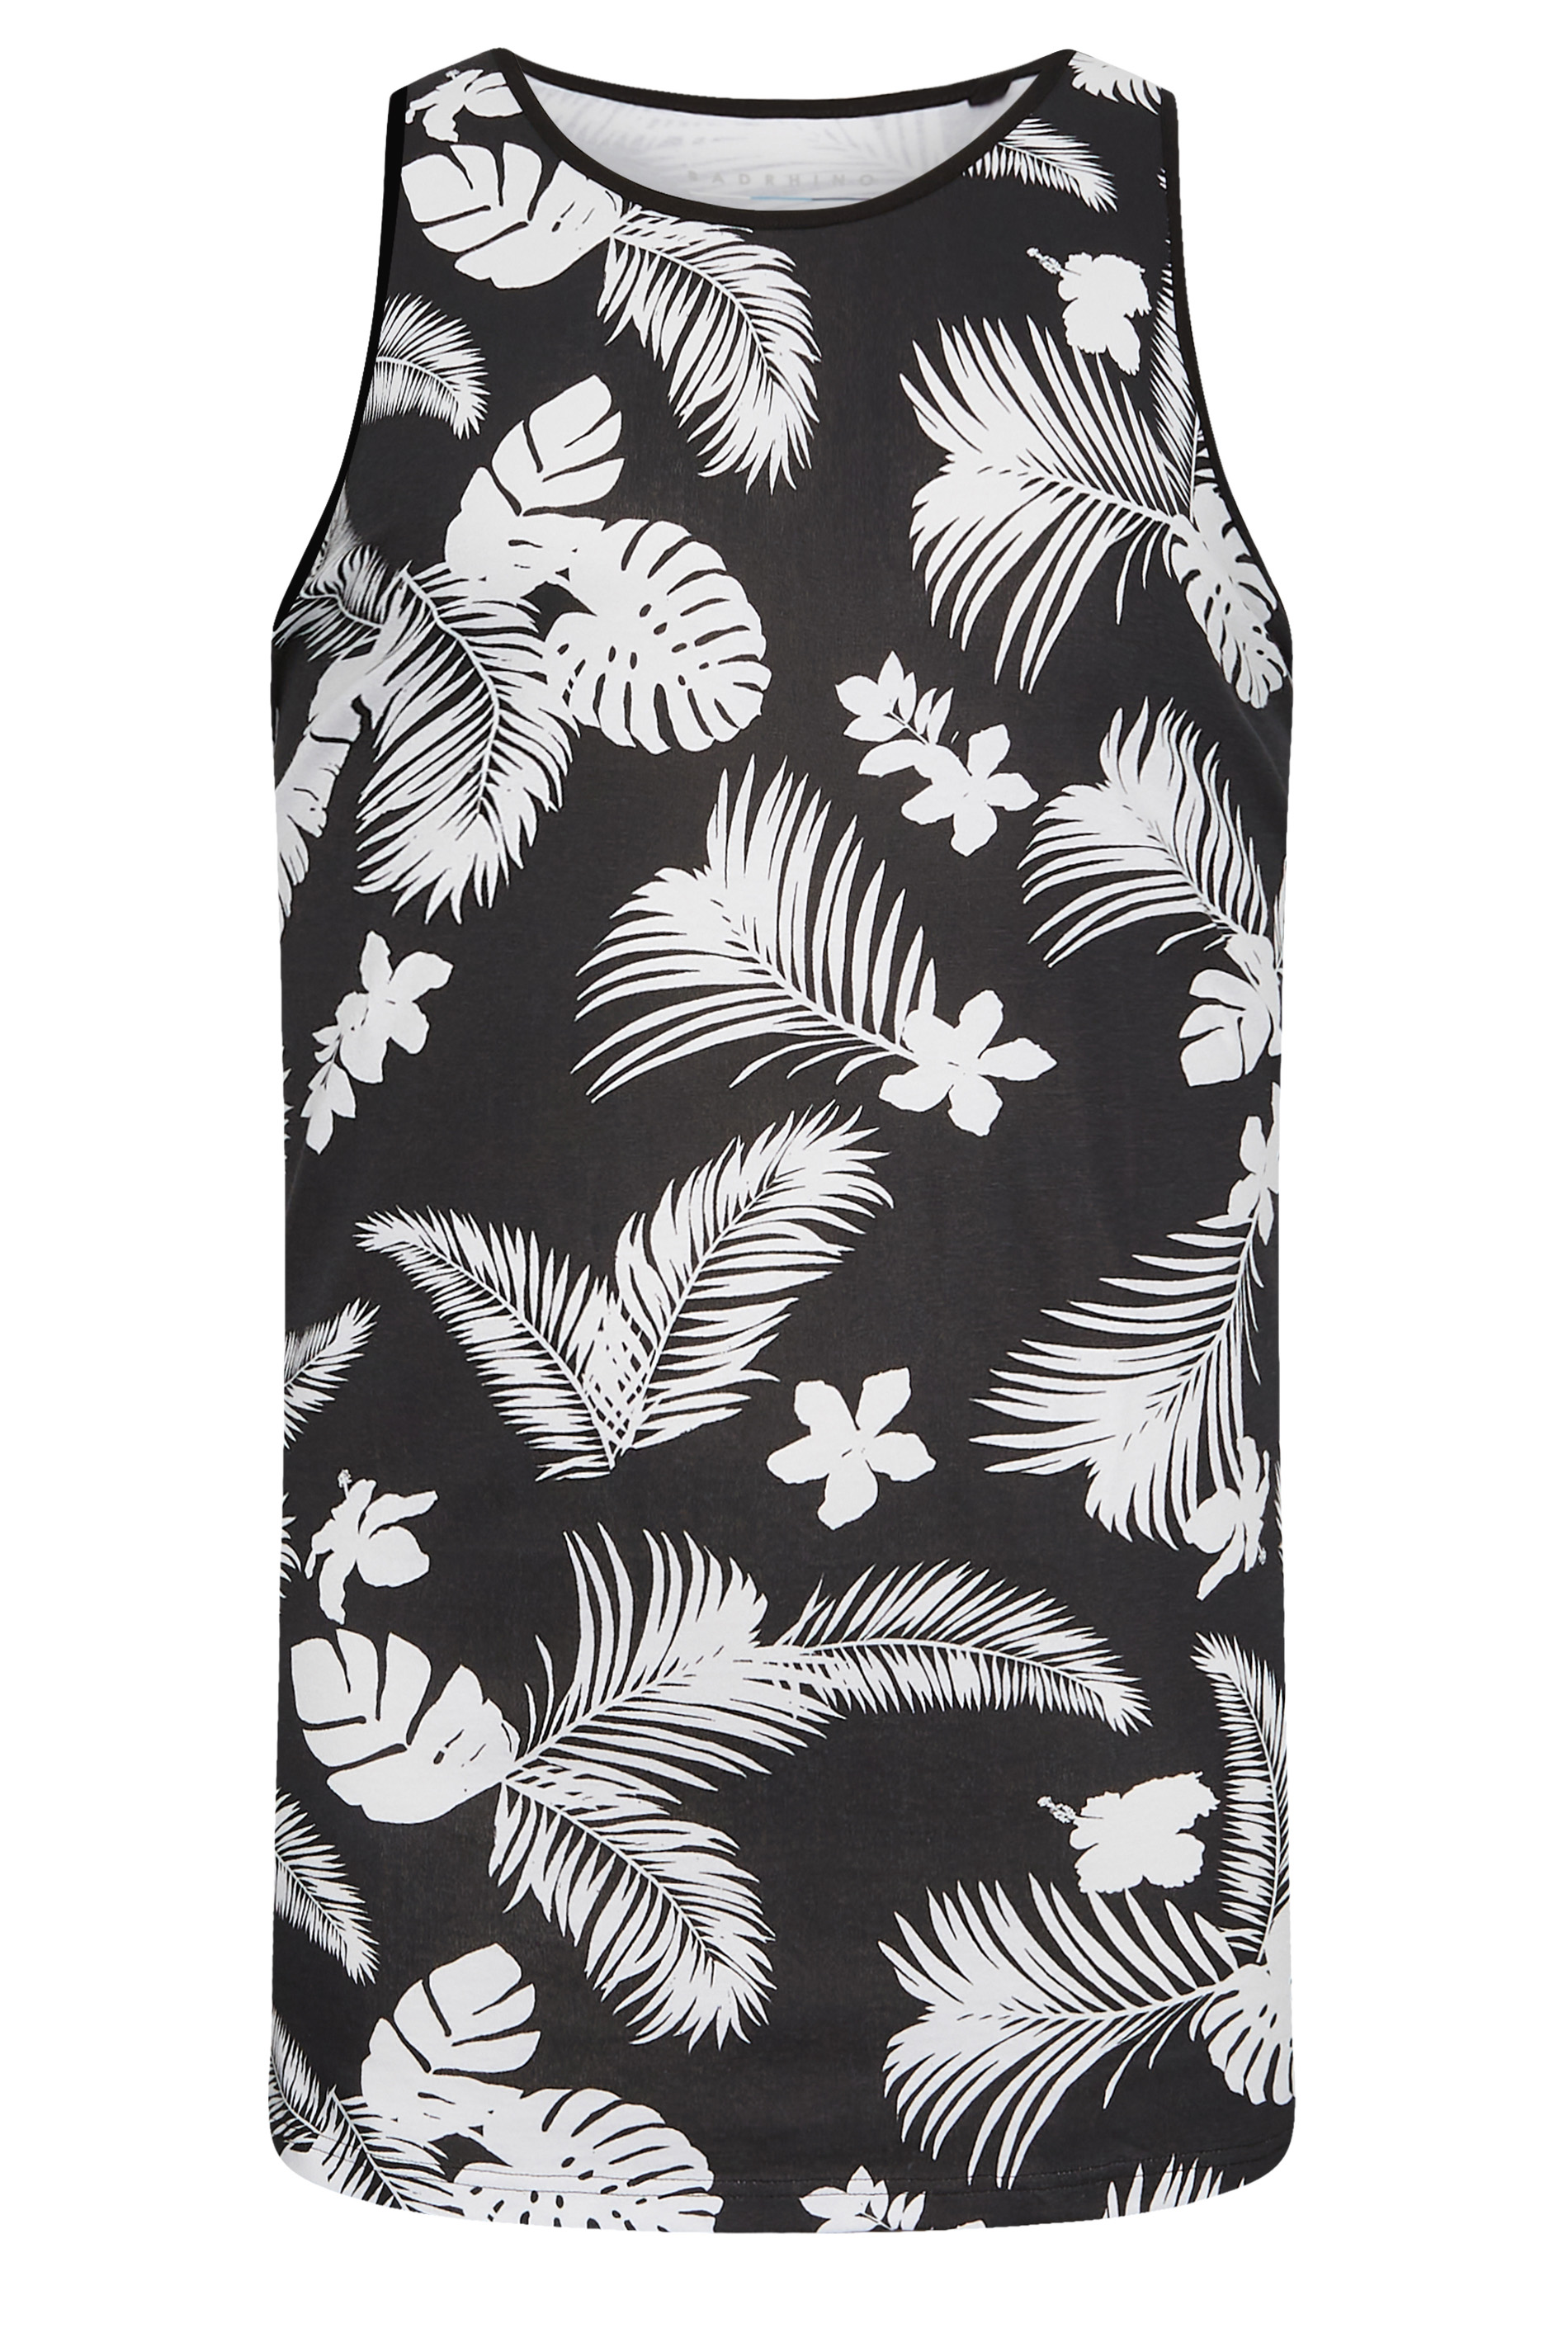 BadRhino Big & Tall Black Tropical Print Vest | BadRhino 3